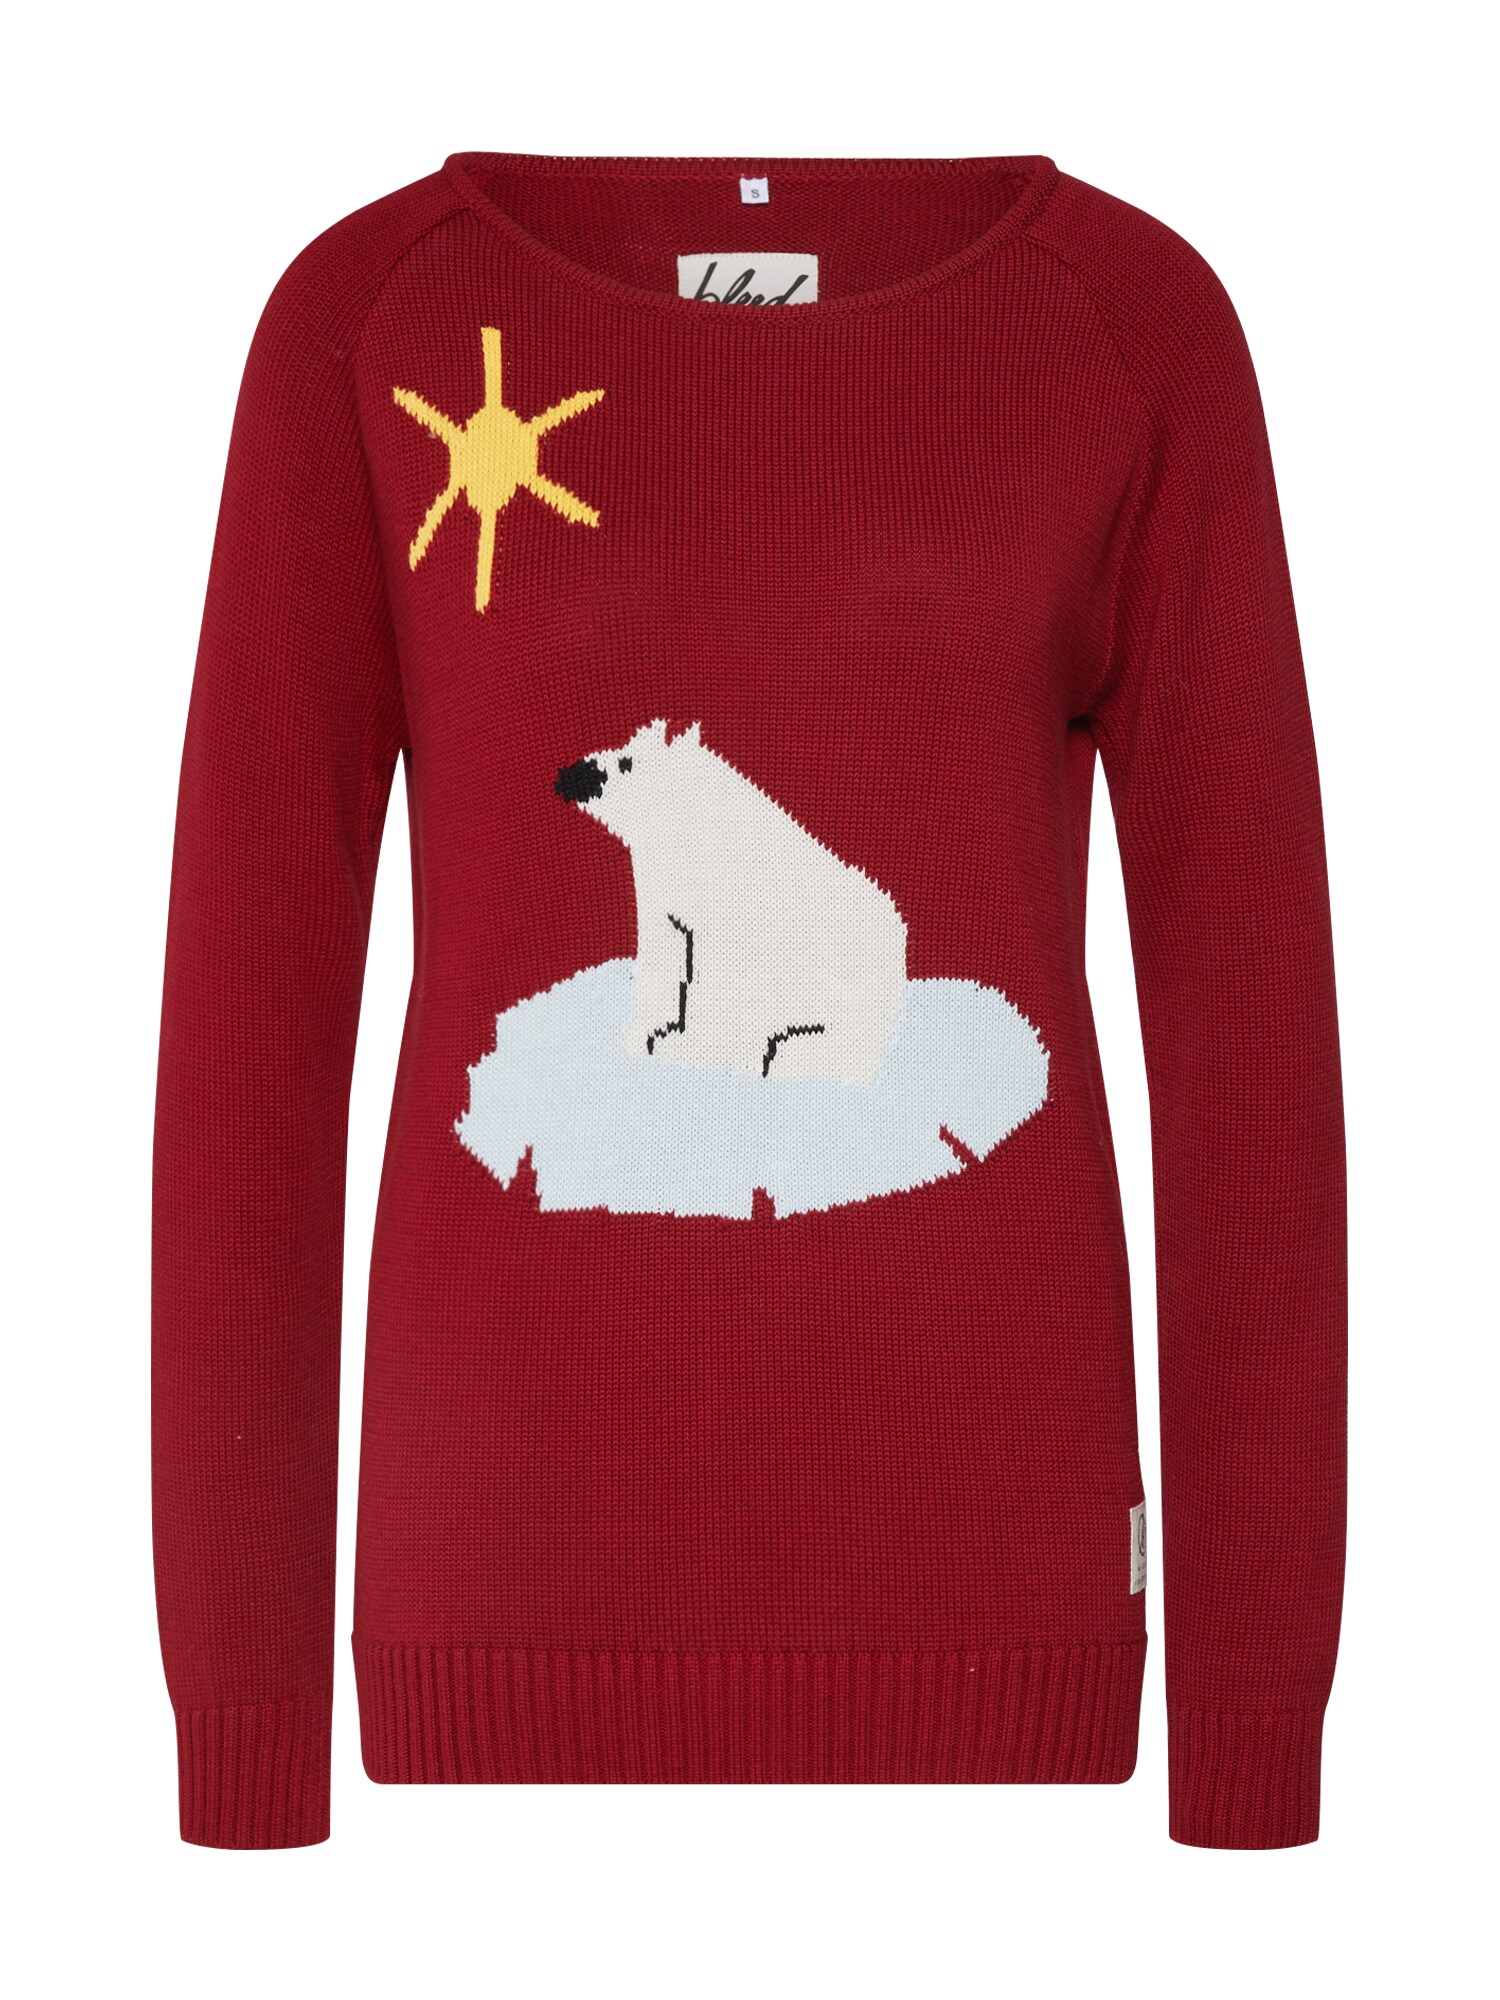 bleed clothing Megztinis 'Better Climate Sweater Ladies'  vyno raudona spalva